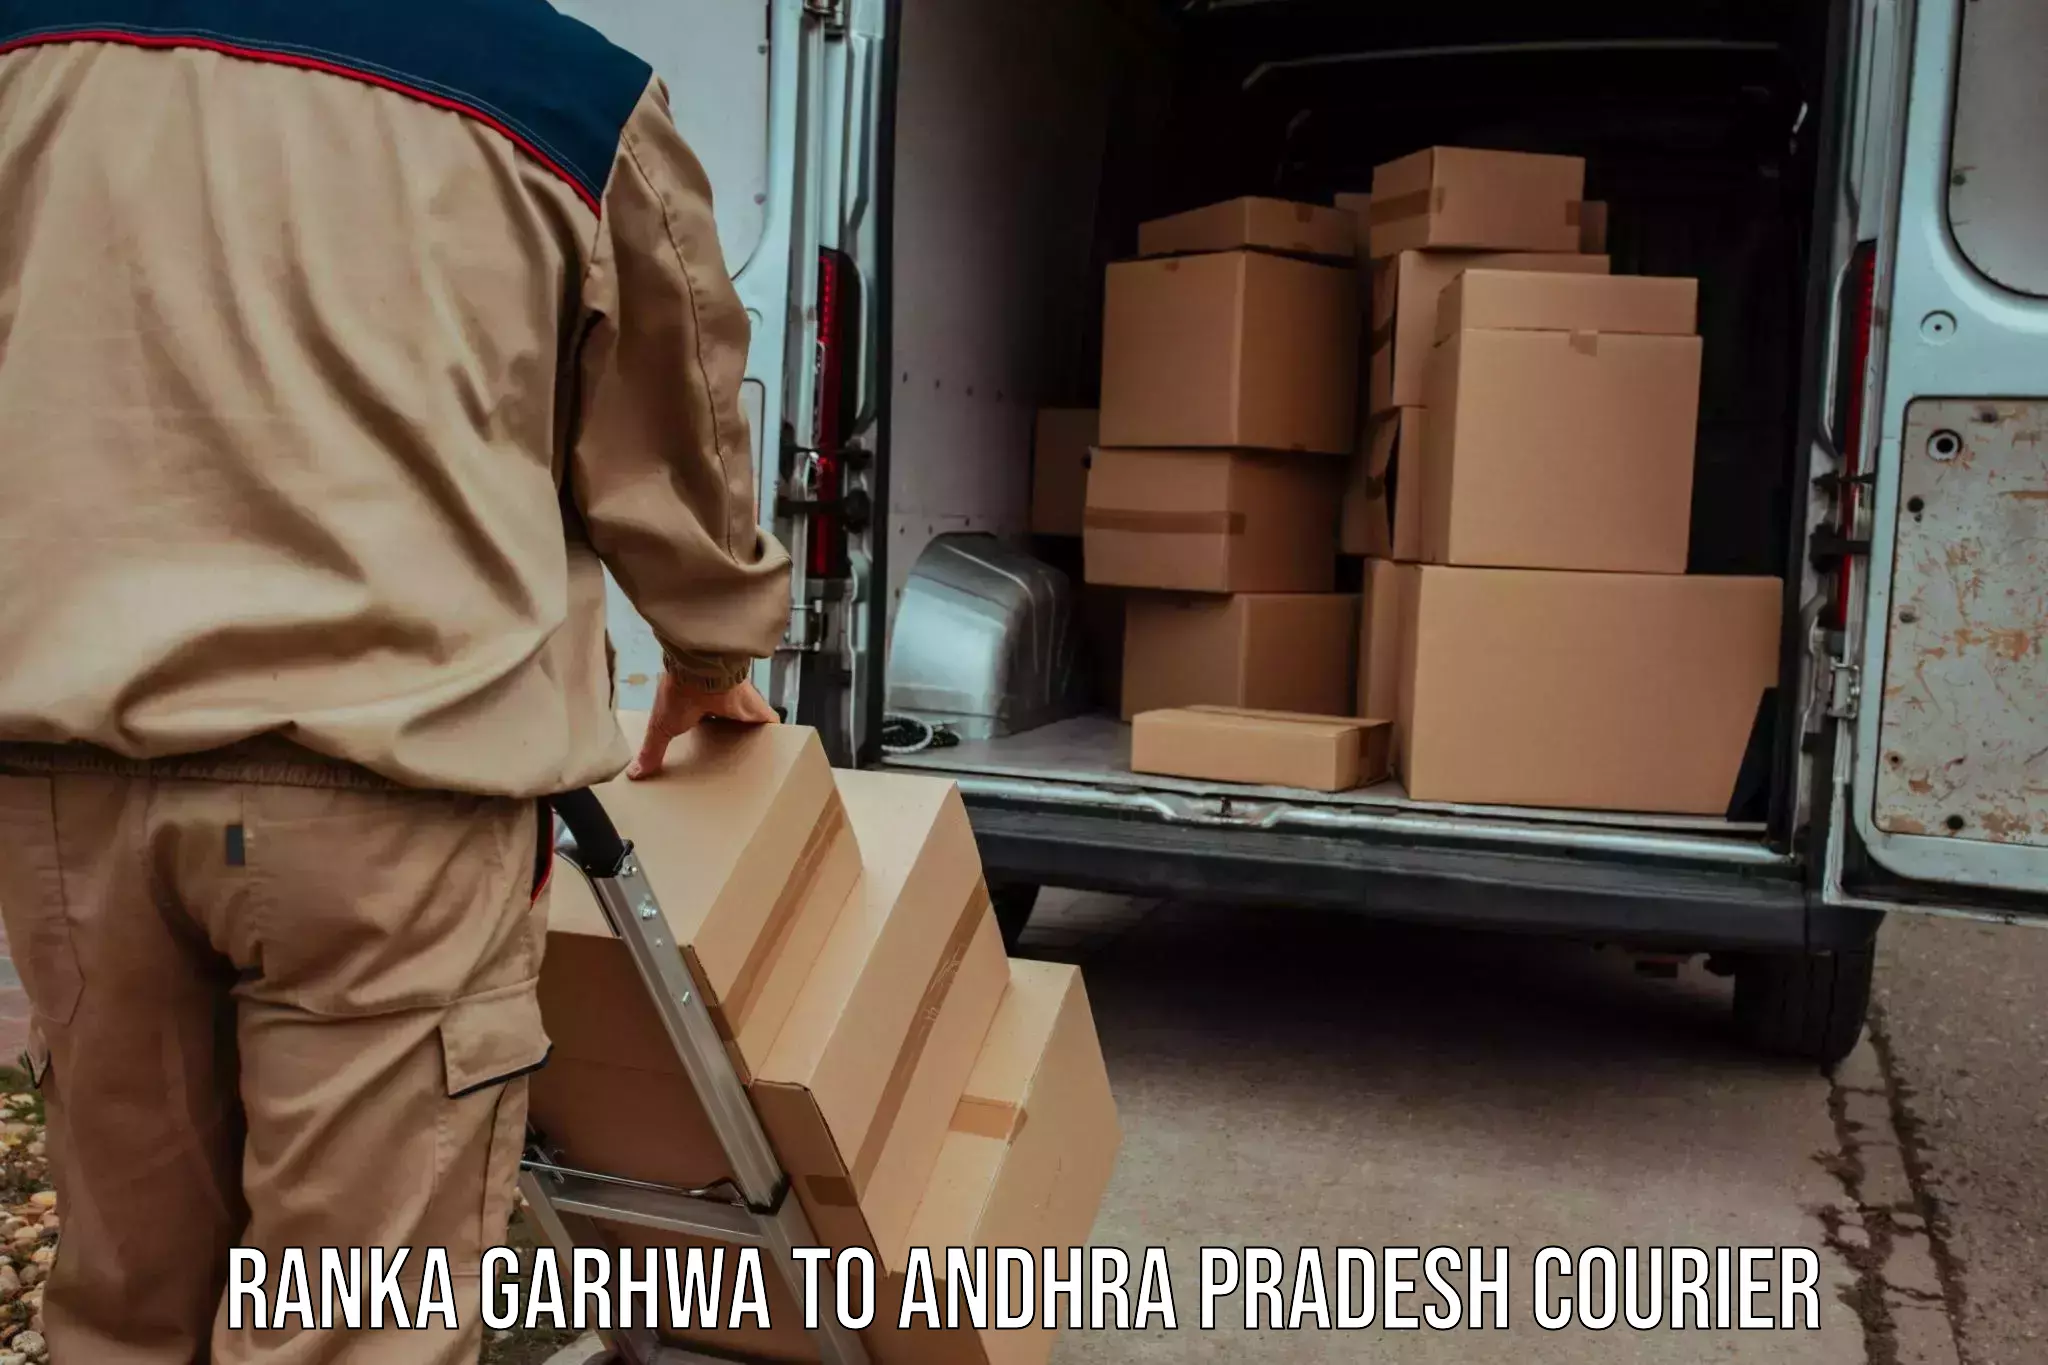 Weekend courier service Ranka Garhwa to Kakinada